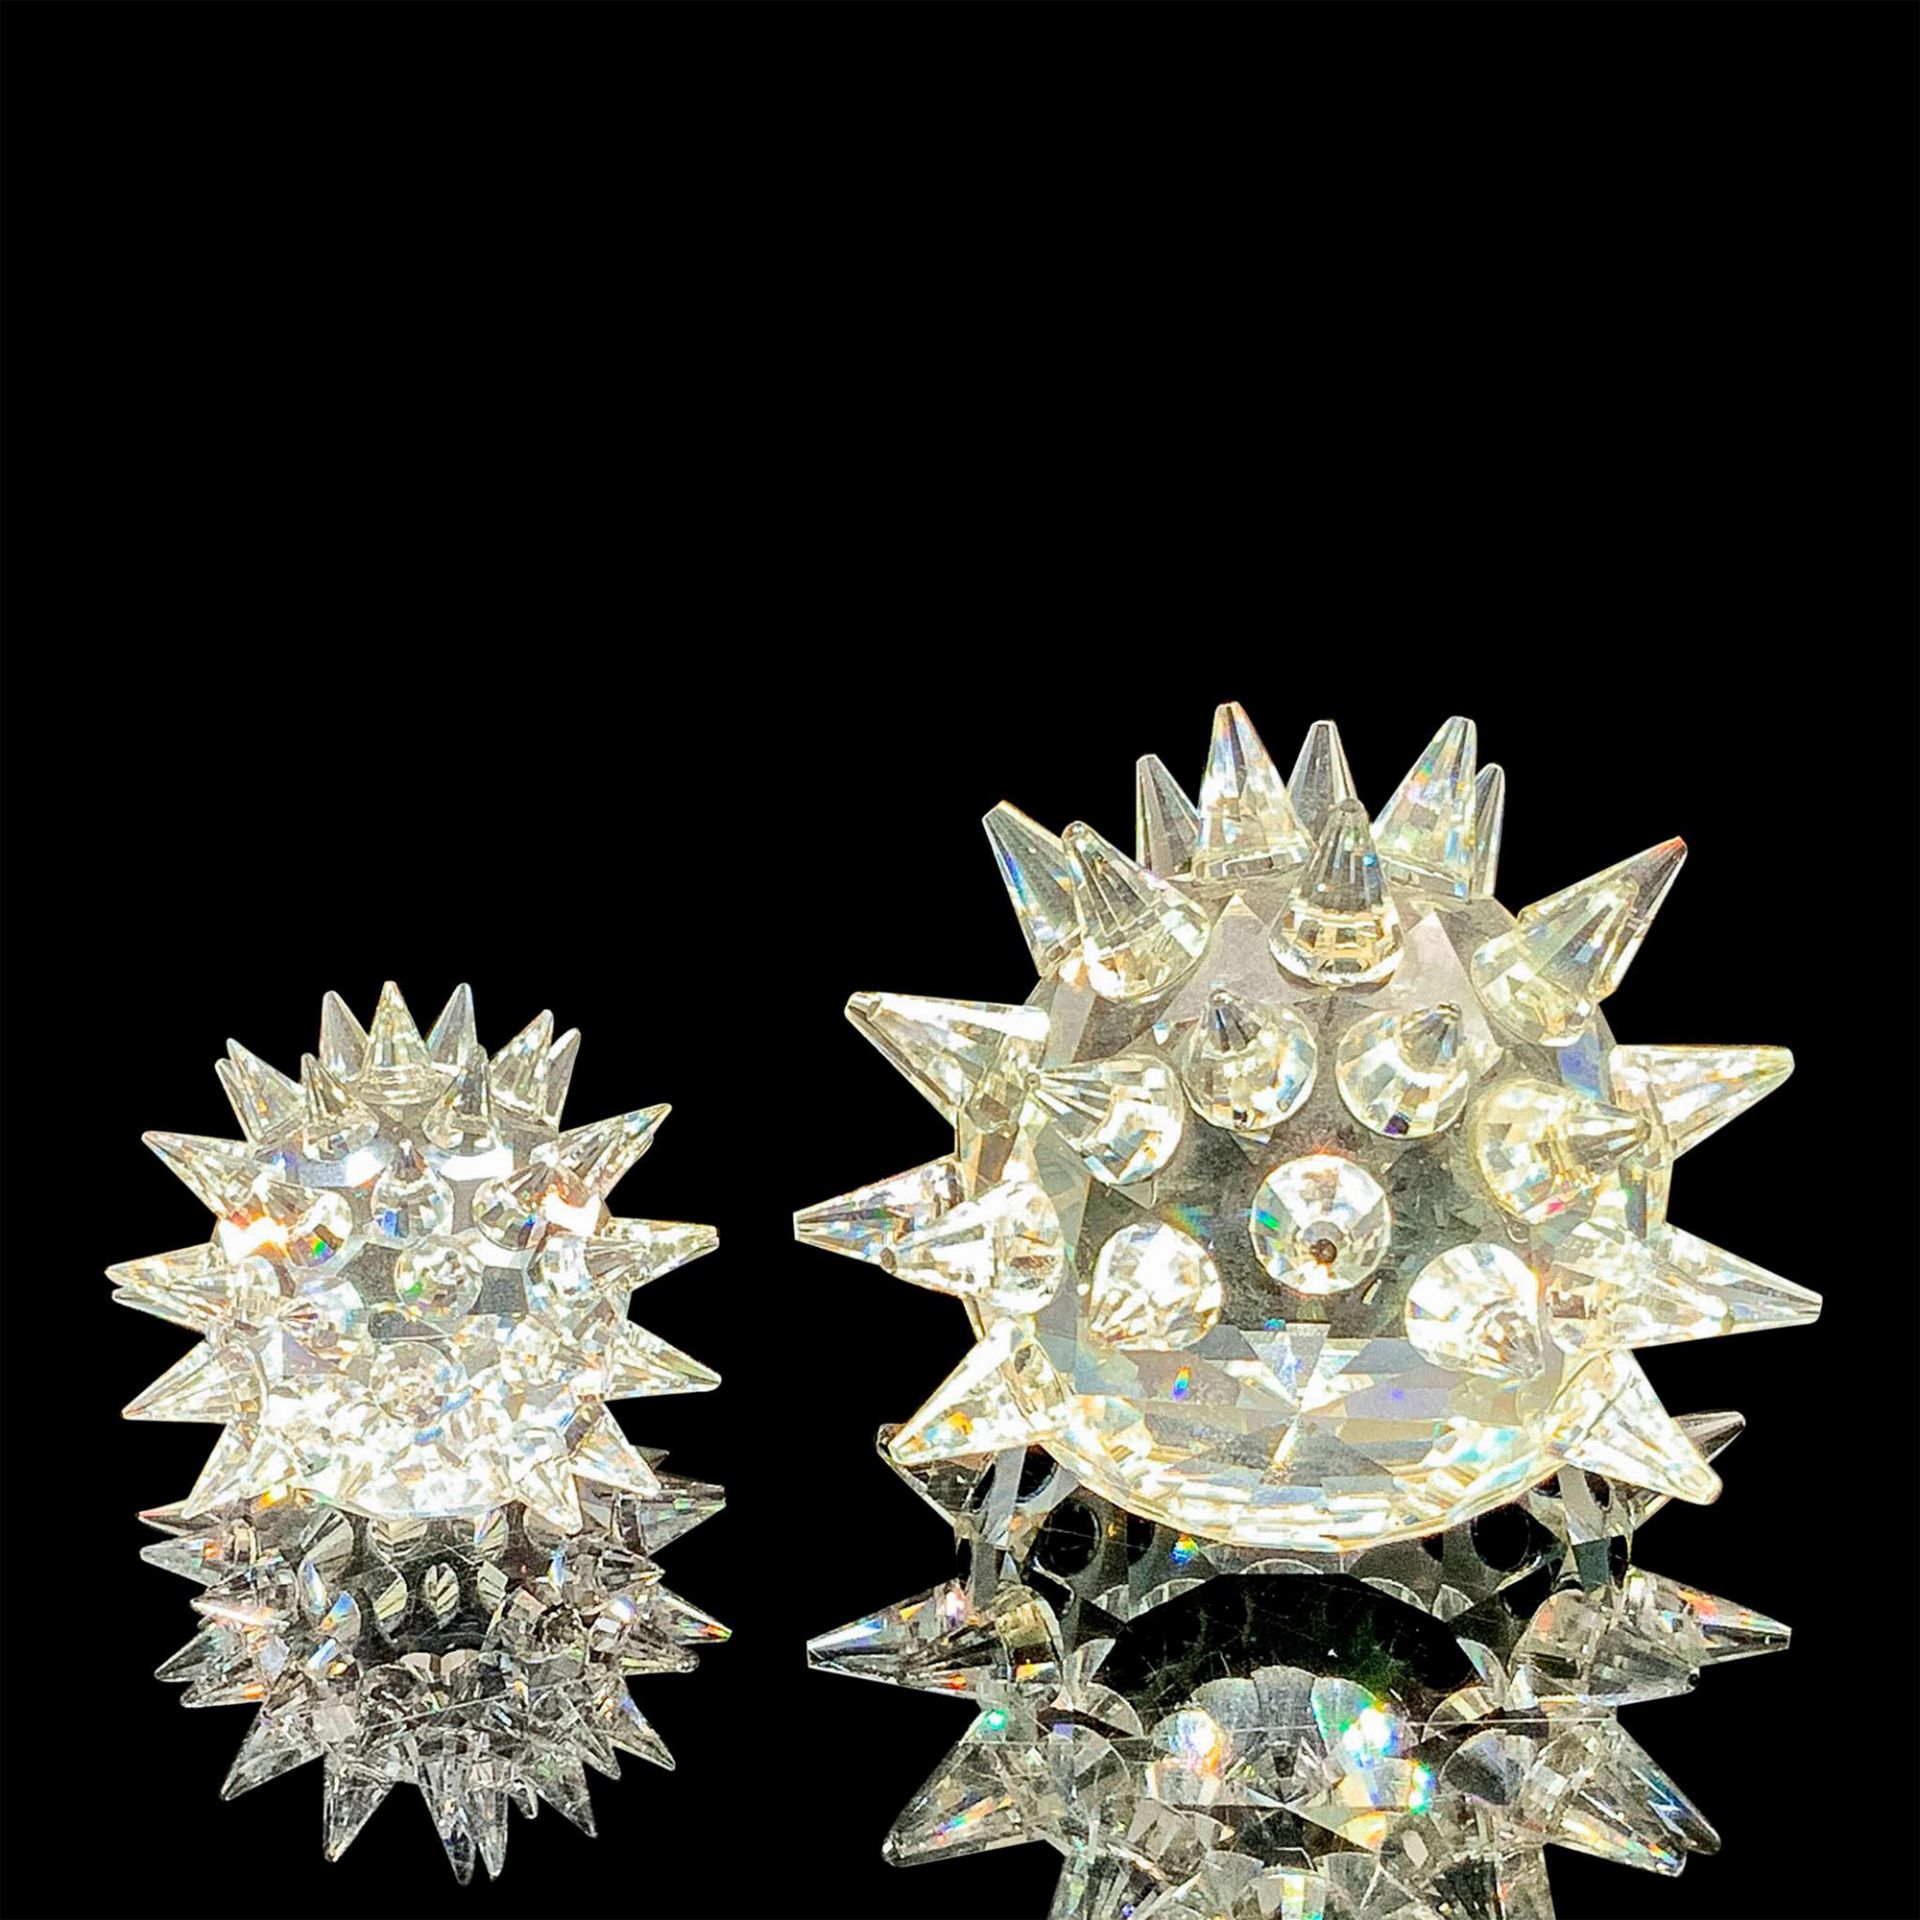 2pc Swarovski Crystal Figurines, Hedgehogs - Image 2 of 2